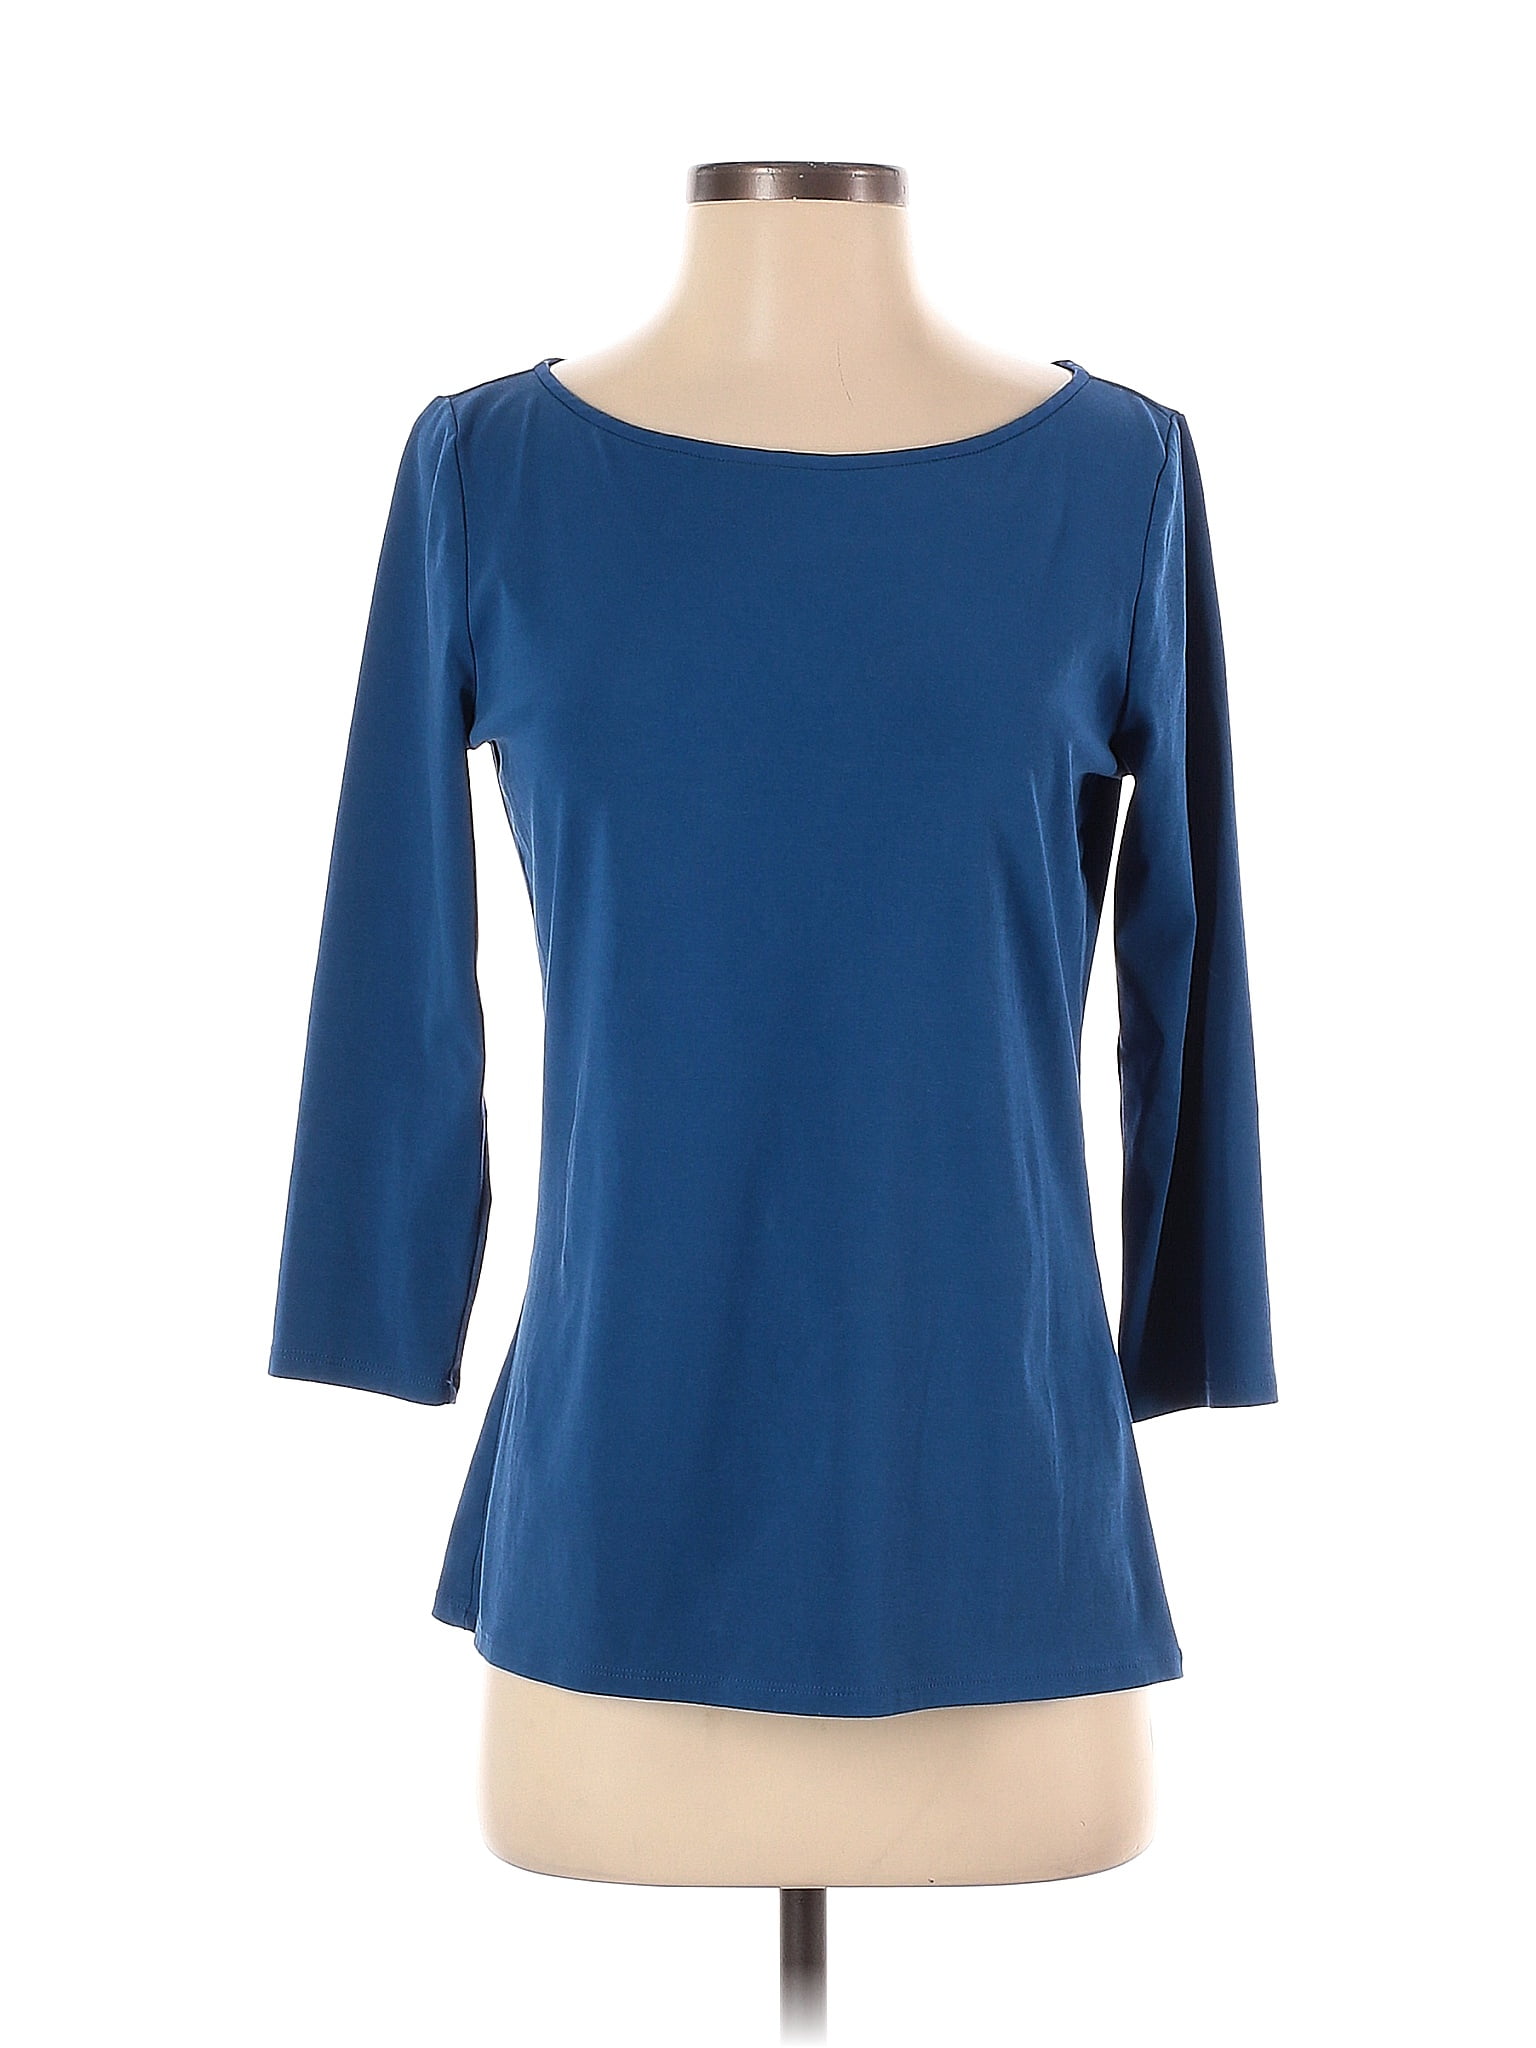 White House Black Market Solid Blue Long Sleeve T-Shirt Size S - 45% ...